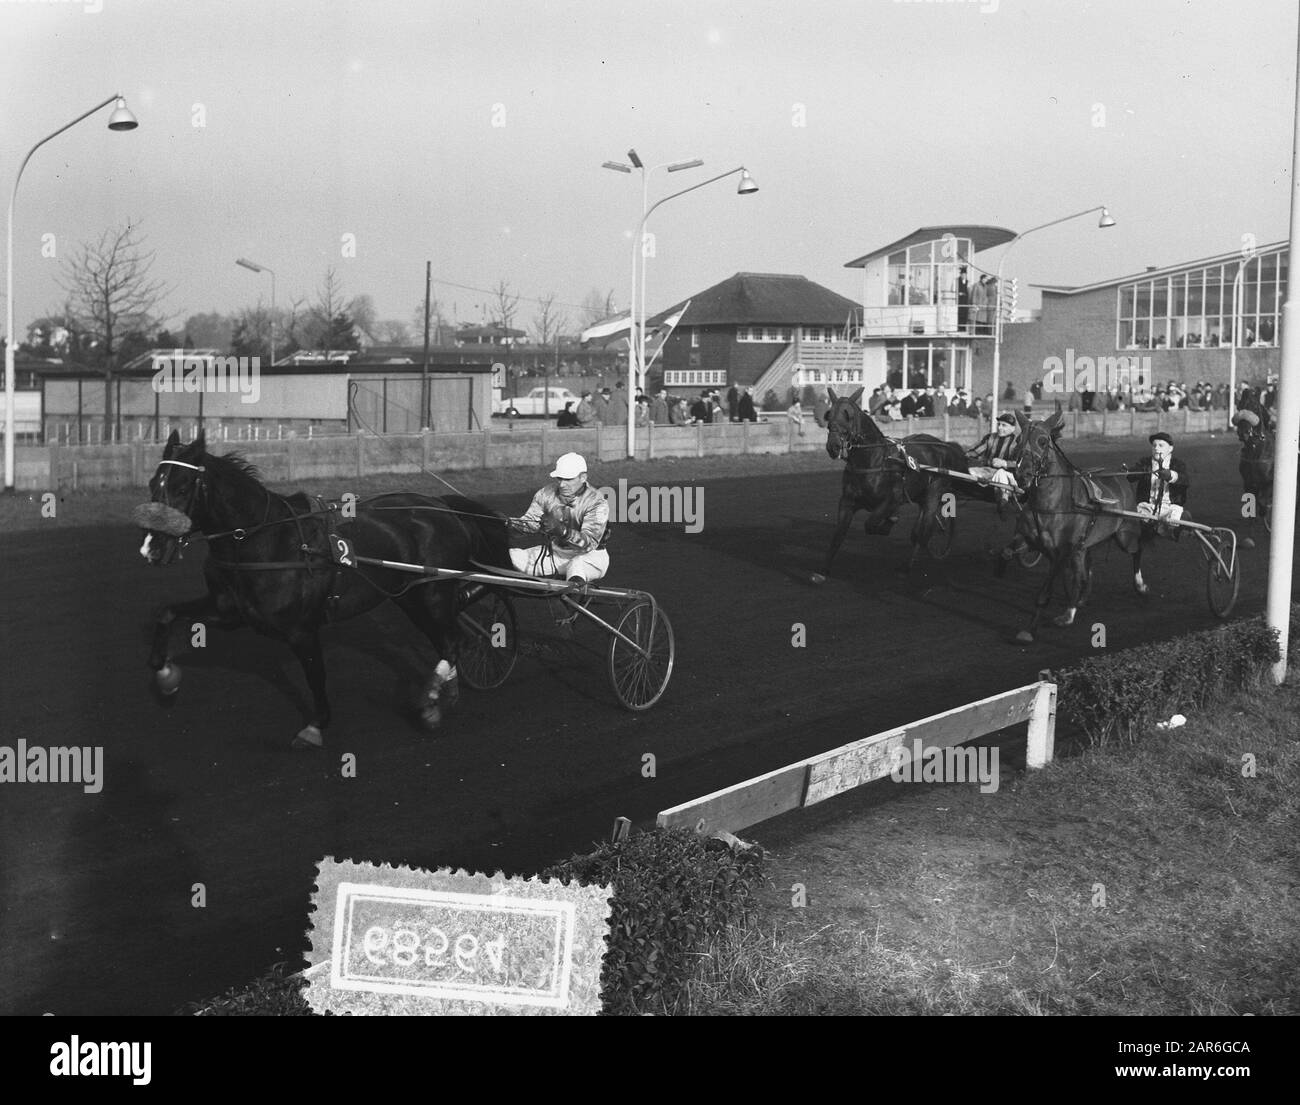 Wintercourses Tango Price Hilversum, Quick Fire i Data: 21 Novembre 1954 luogo: Hilversum Parole Chiave: Trot- and racing Foto Stock